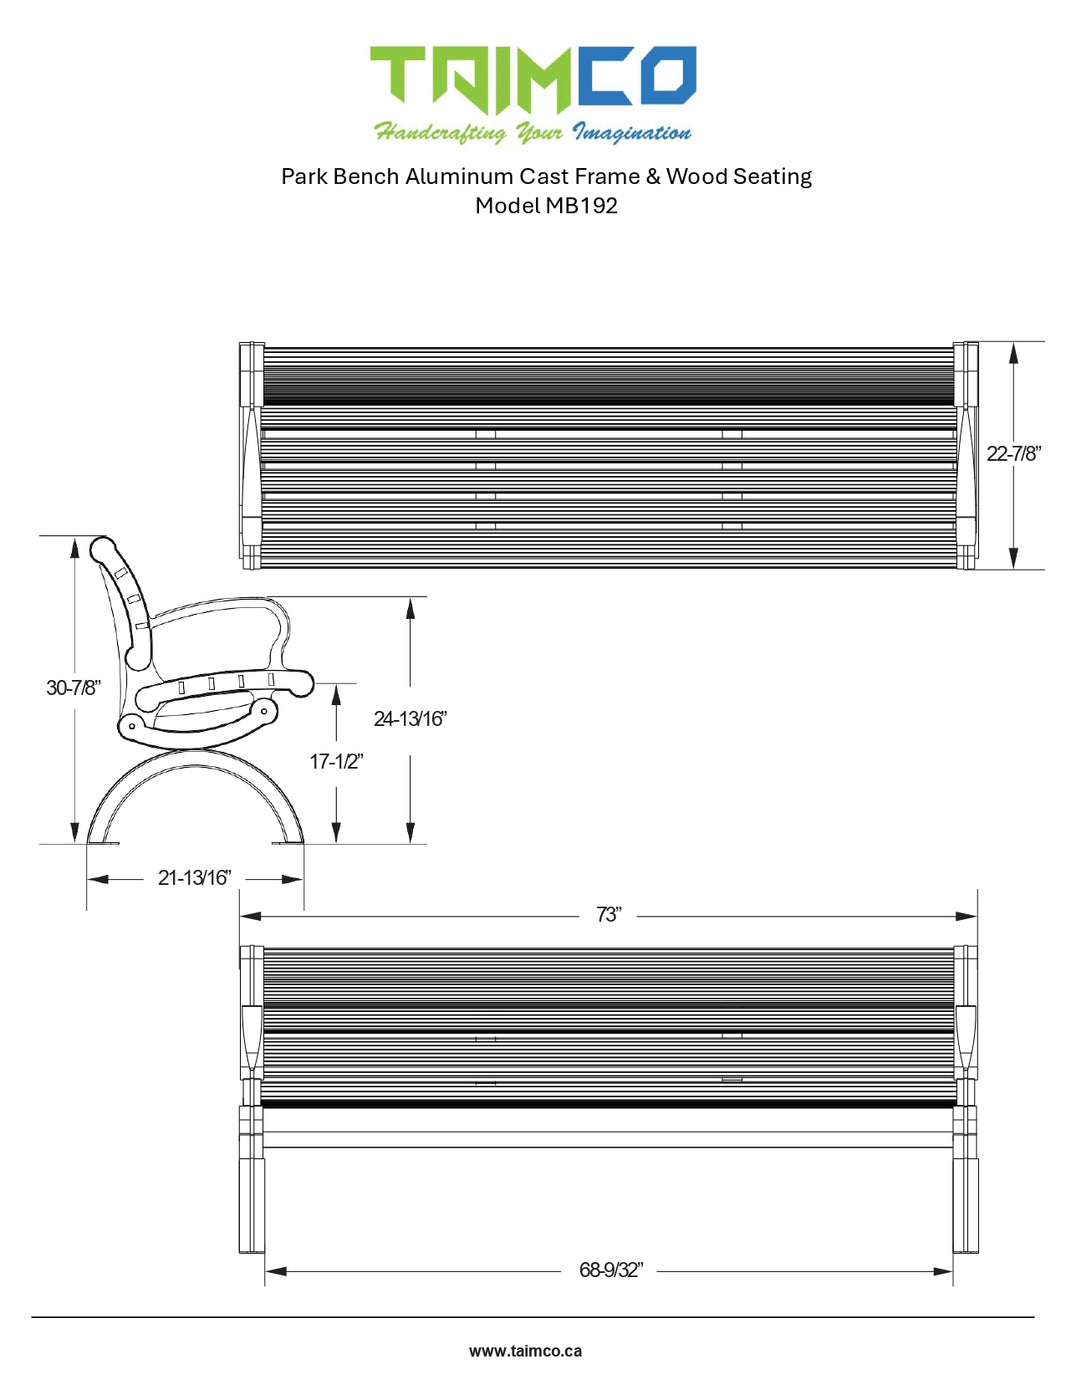 Park Bench Cast Aluminum Frame & Wood Seating | Model MB192